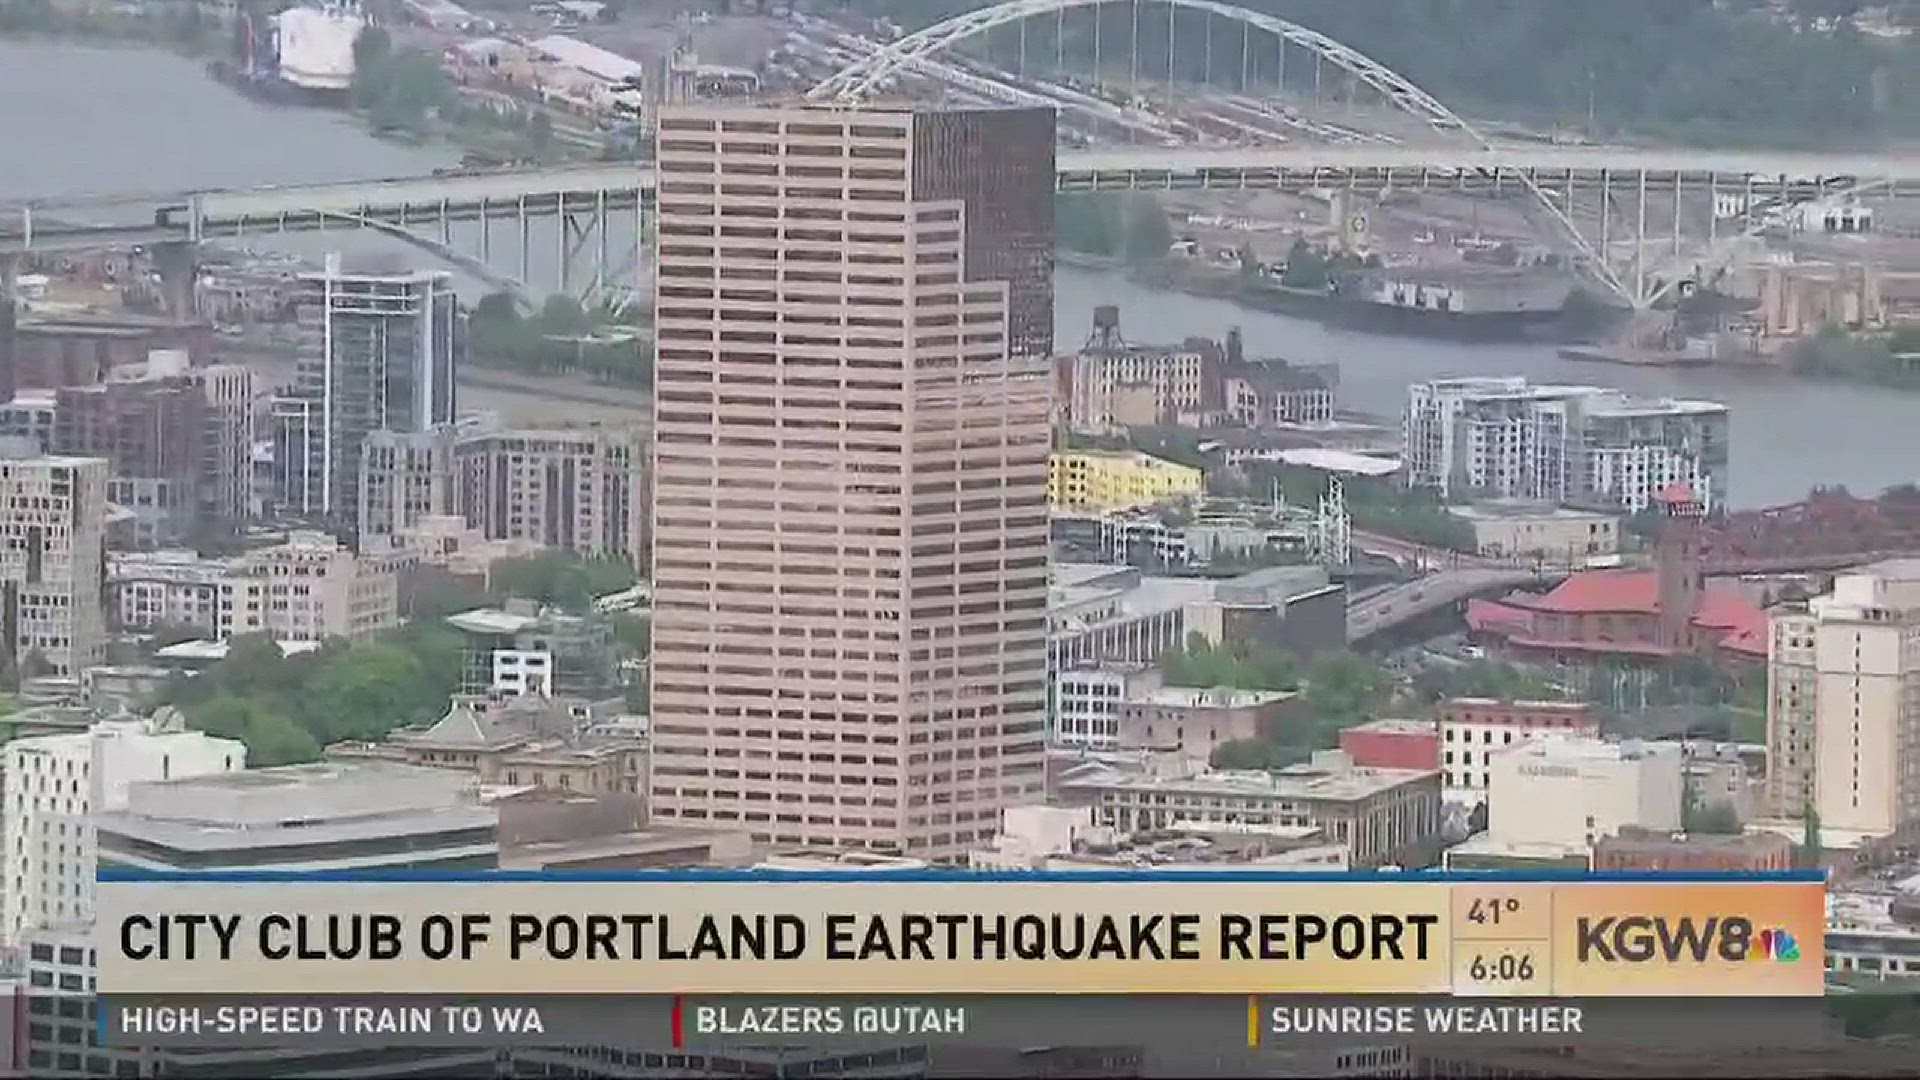 City Club of Portland earthquake report